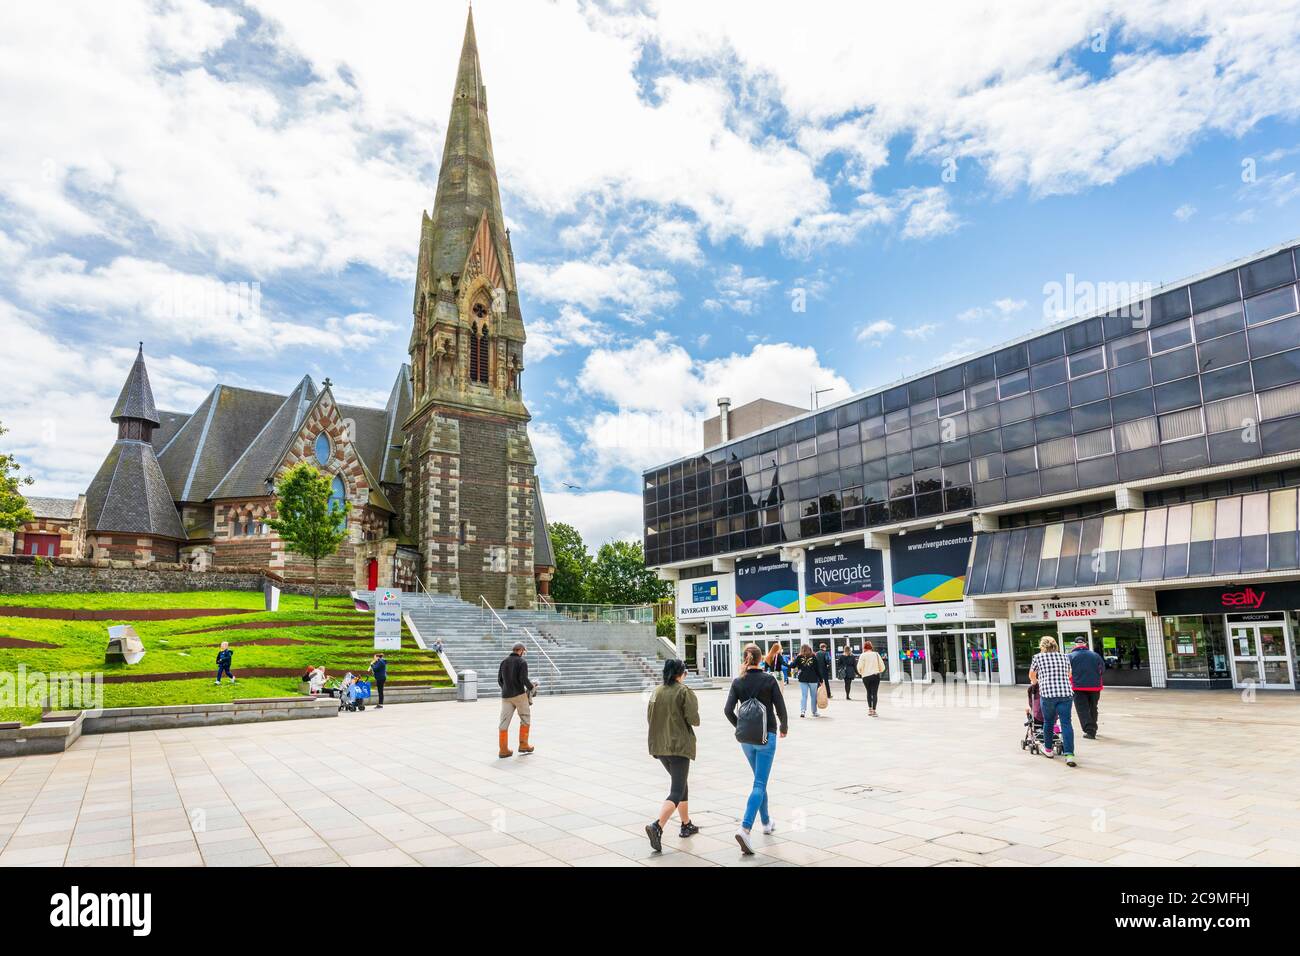 Entrance to the Rivergate shopping centre, Irvine, Ayrshire, Scotland, UK with the Trinity Church Stock Photo